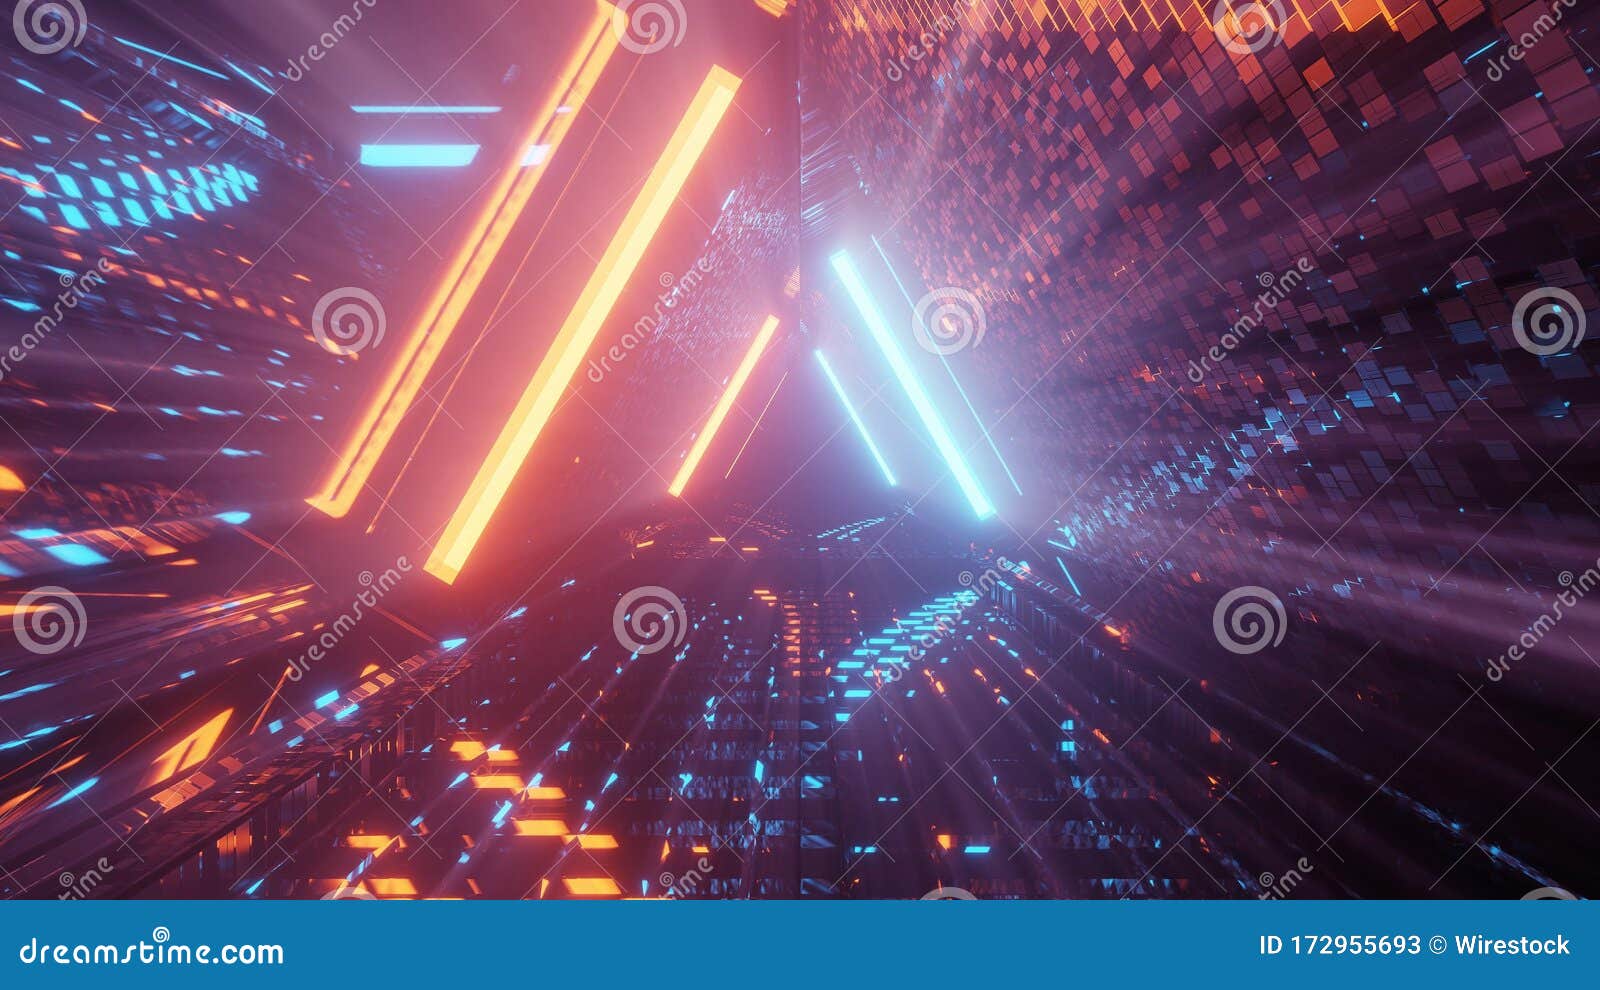 cool triangular d futuristic sci-fi techno lights